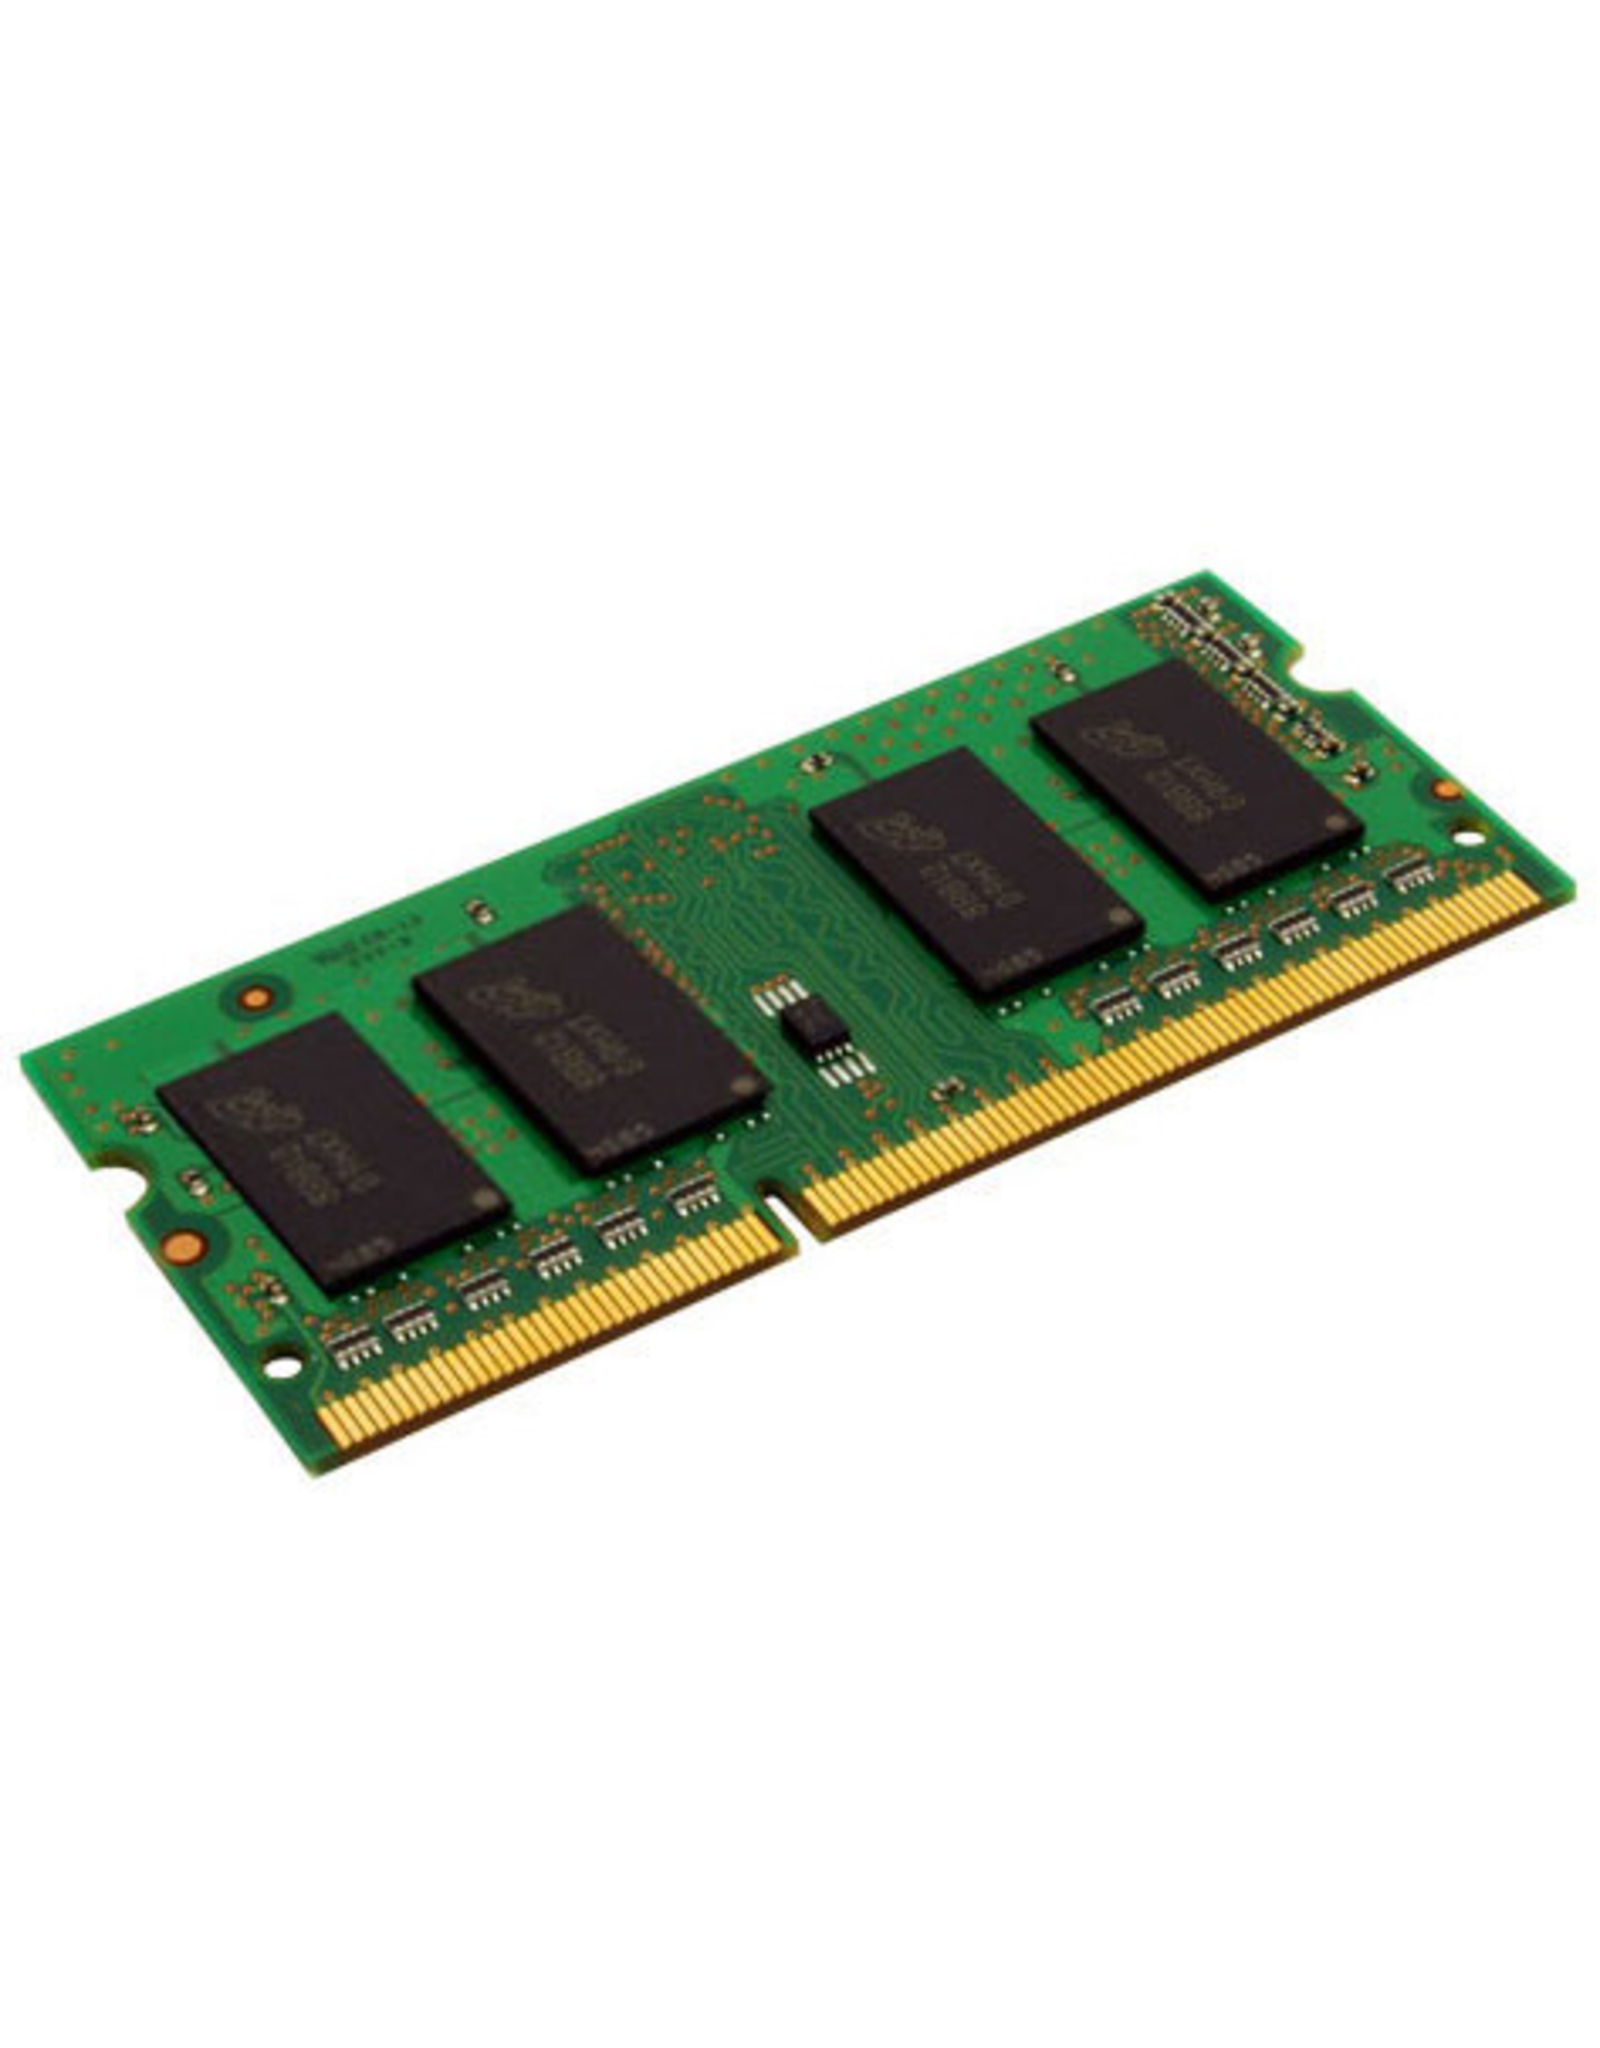 iLove Computers 2GB 667MHz (PC5300) DDR2 SODIMM 200 pin RAM module